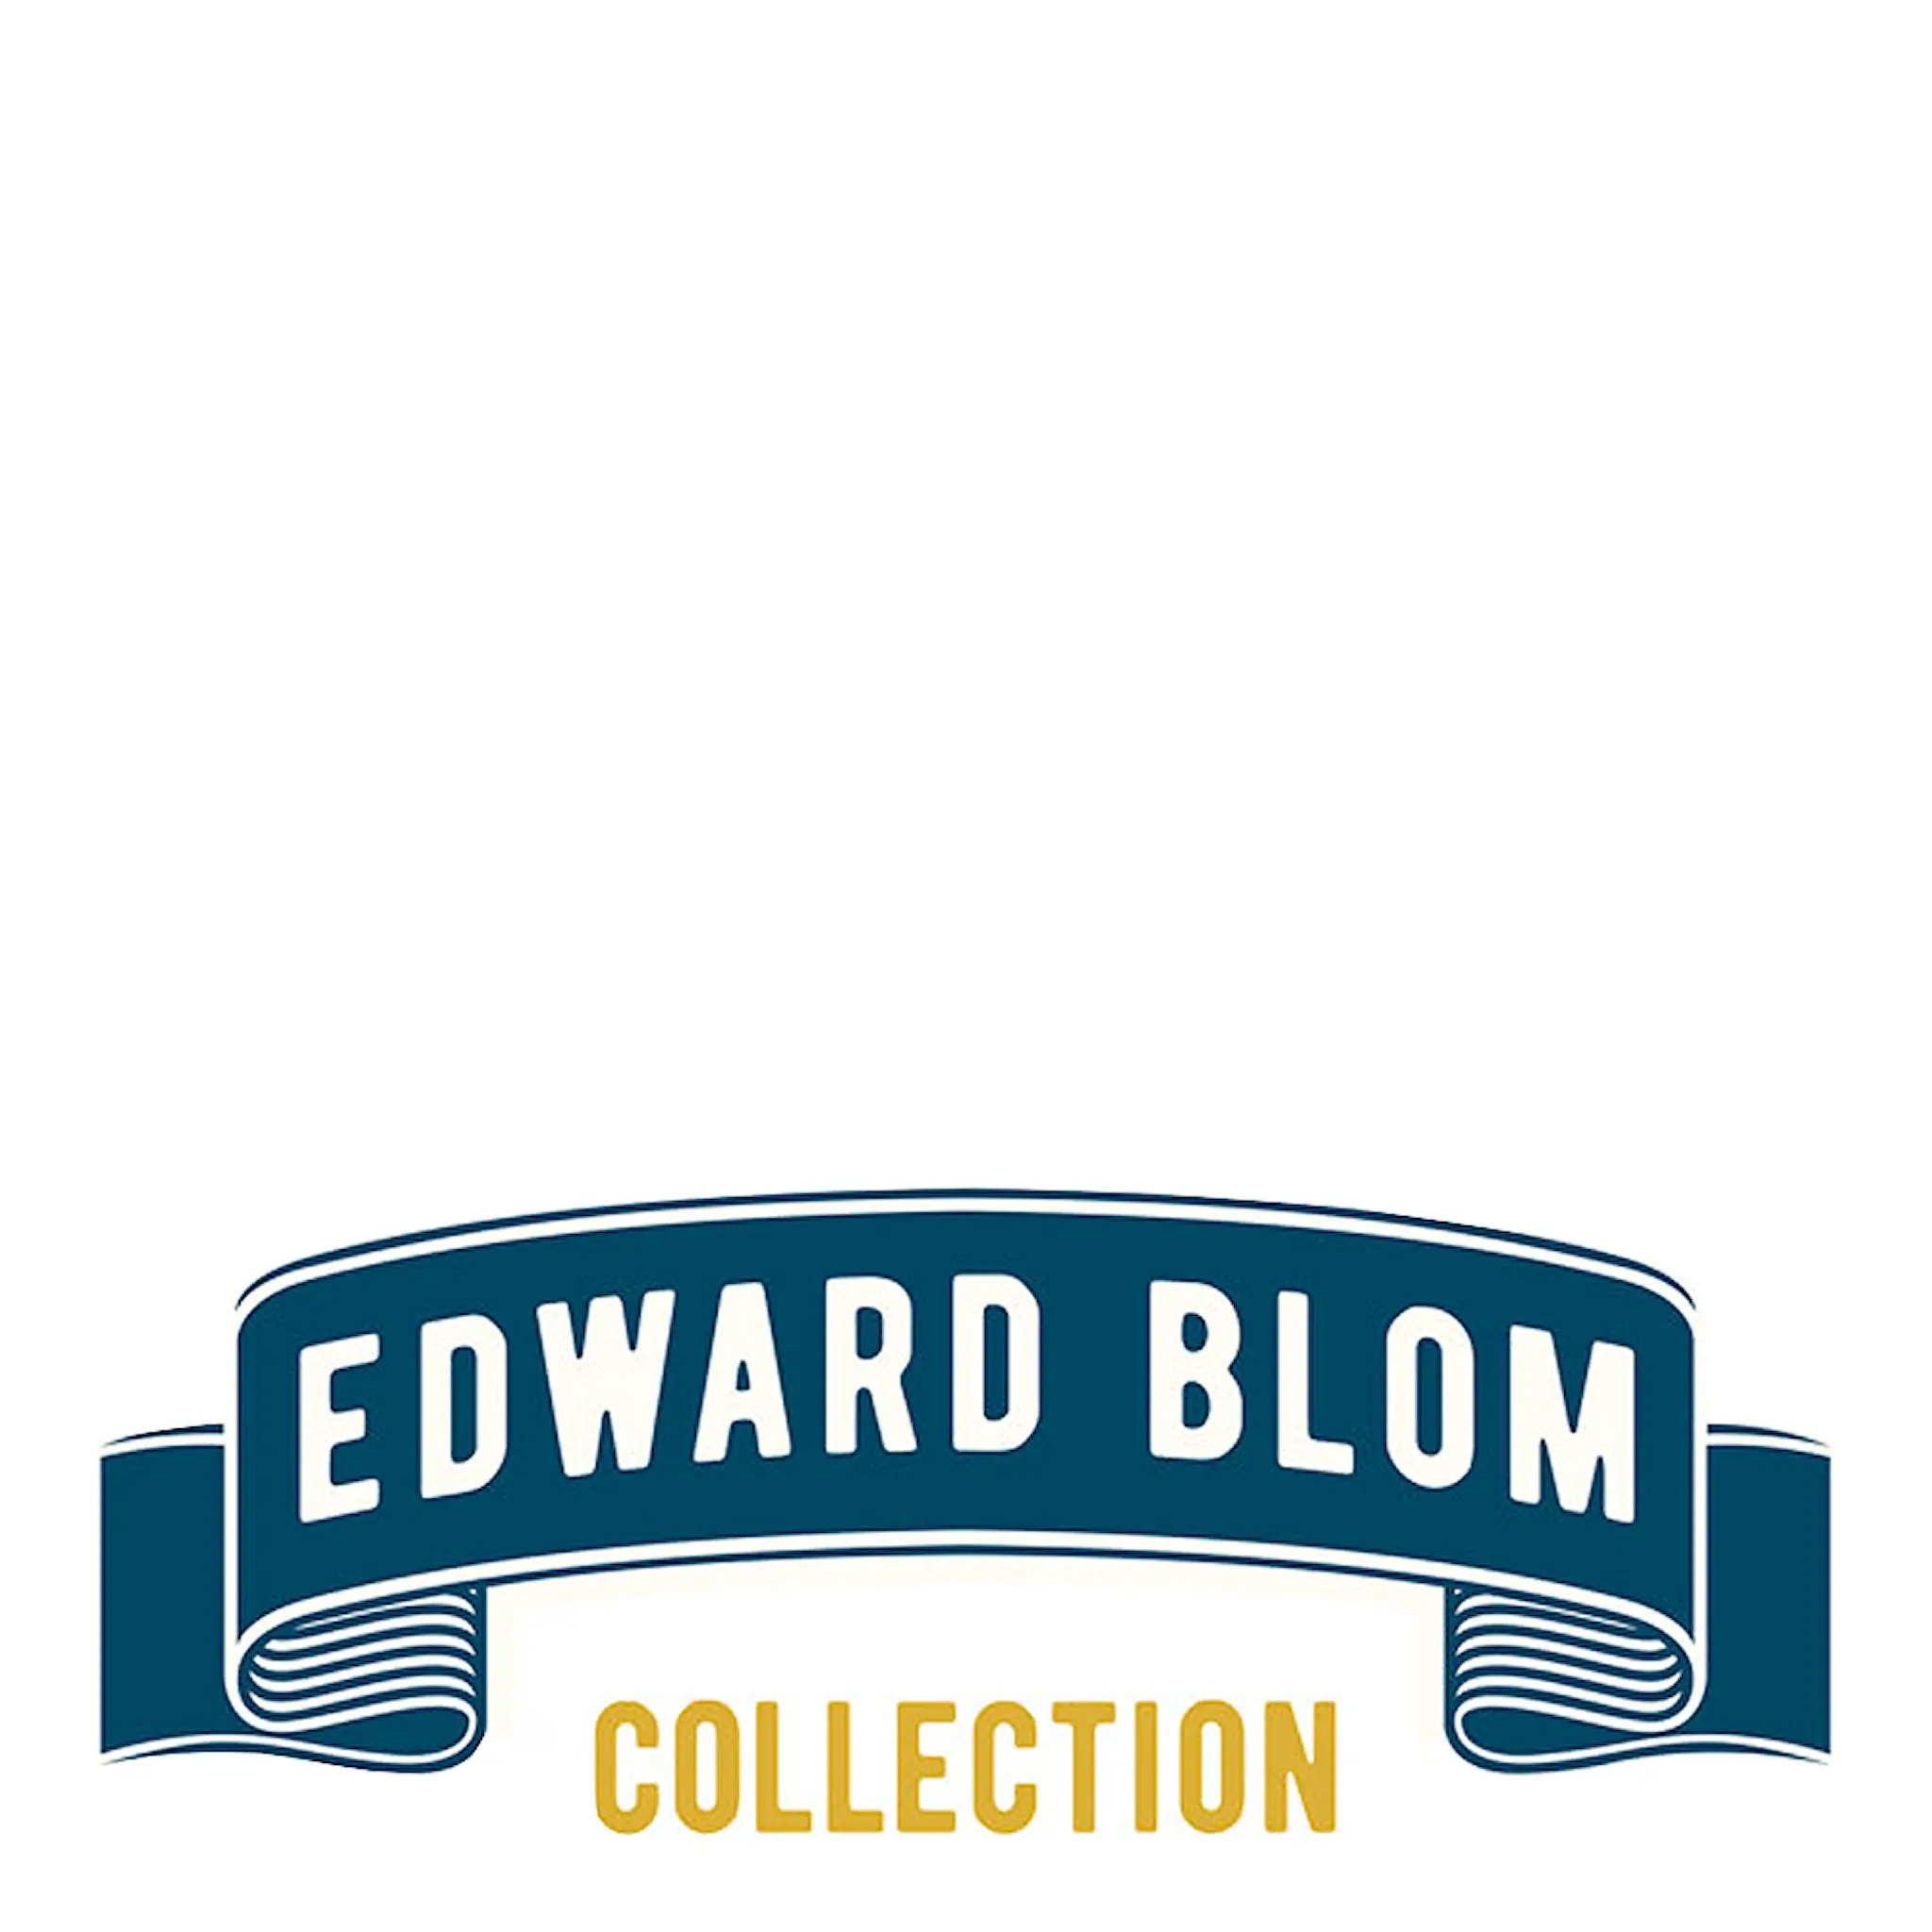 Edward Blom Collection ølglass No 4: Som ungdom ska man